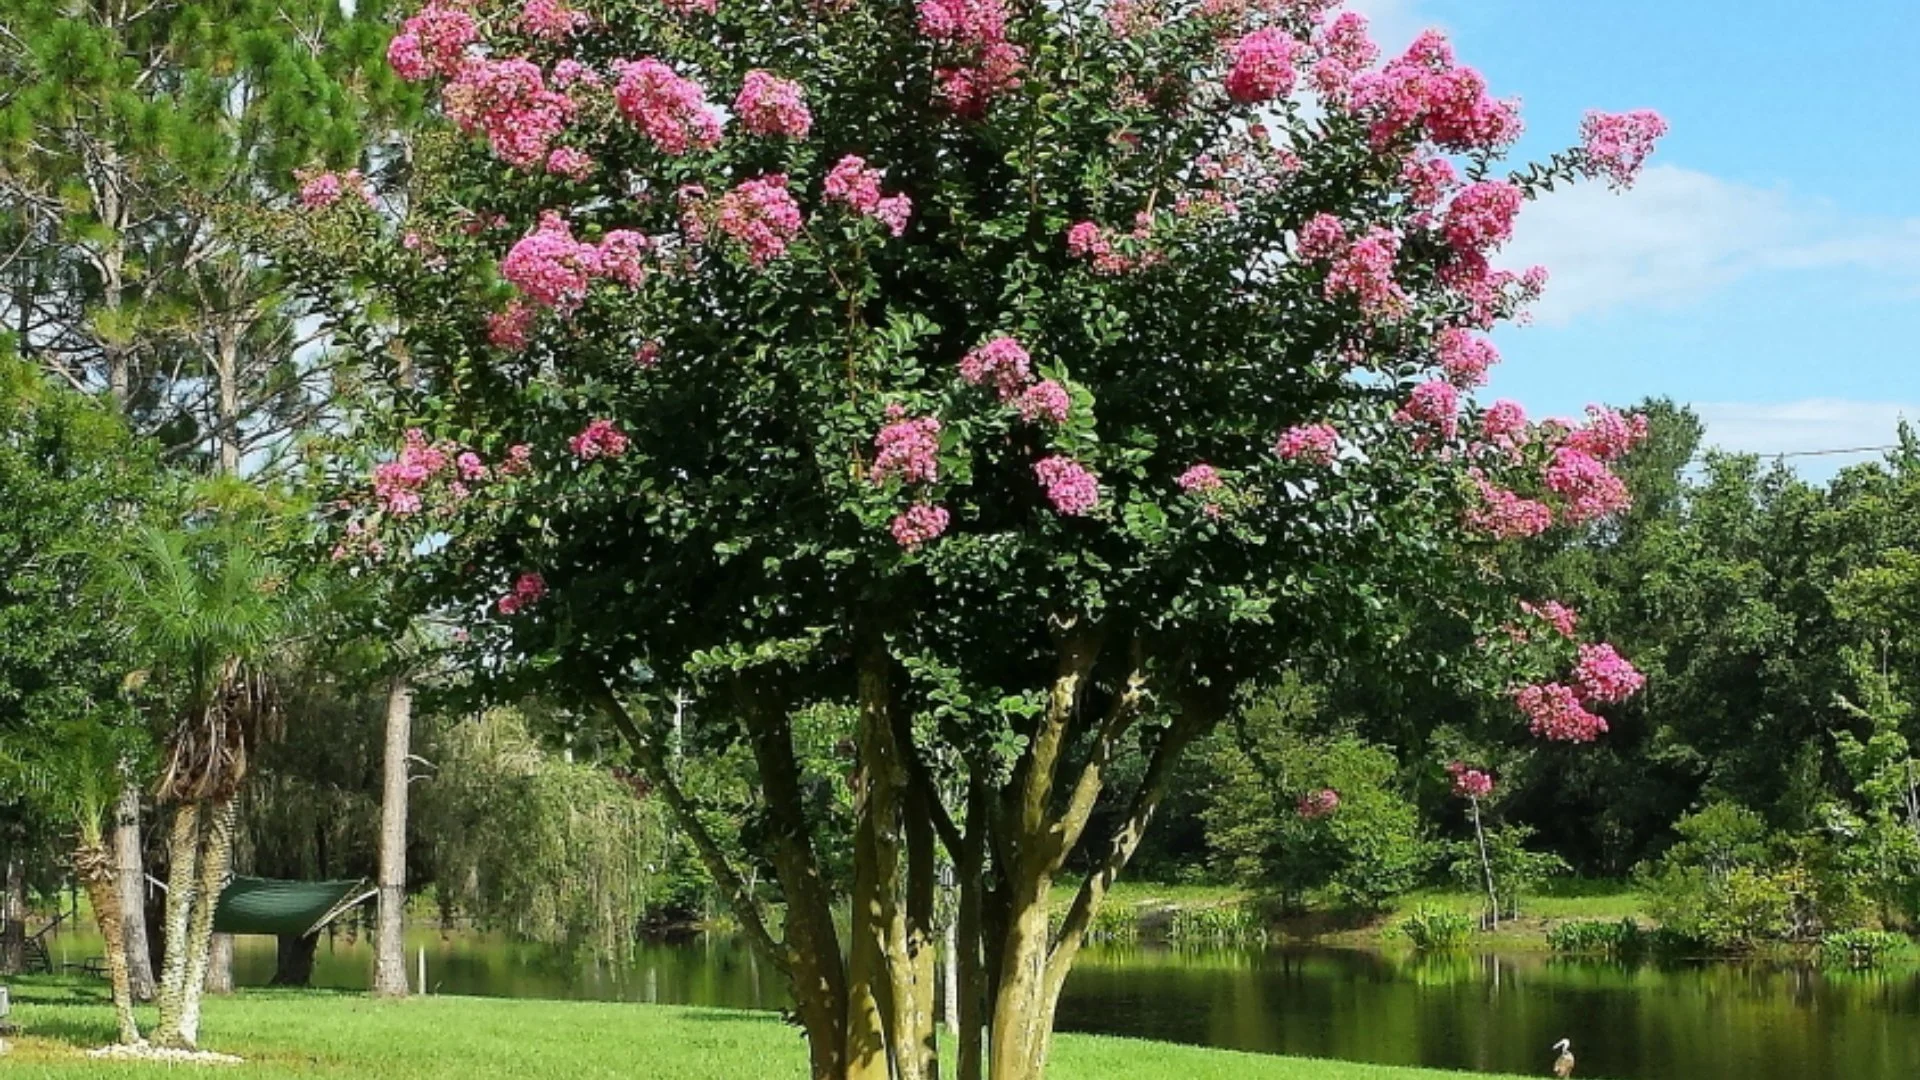 Should You Trim Crepe Myrtle Trees?